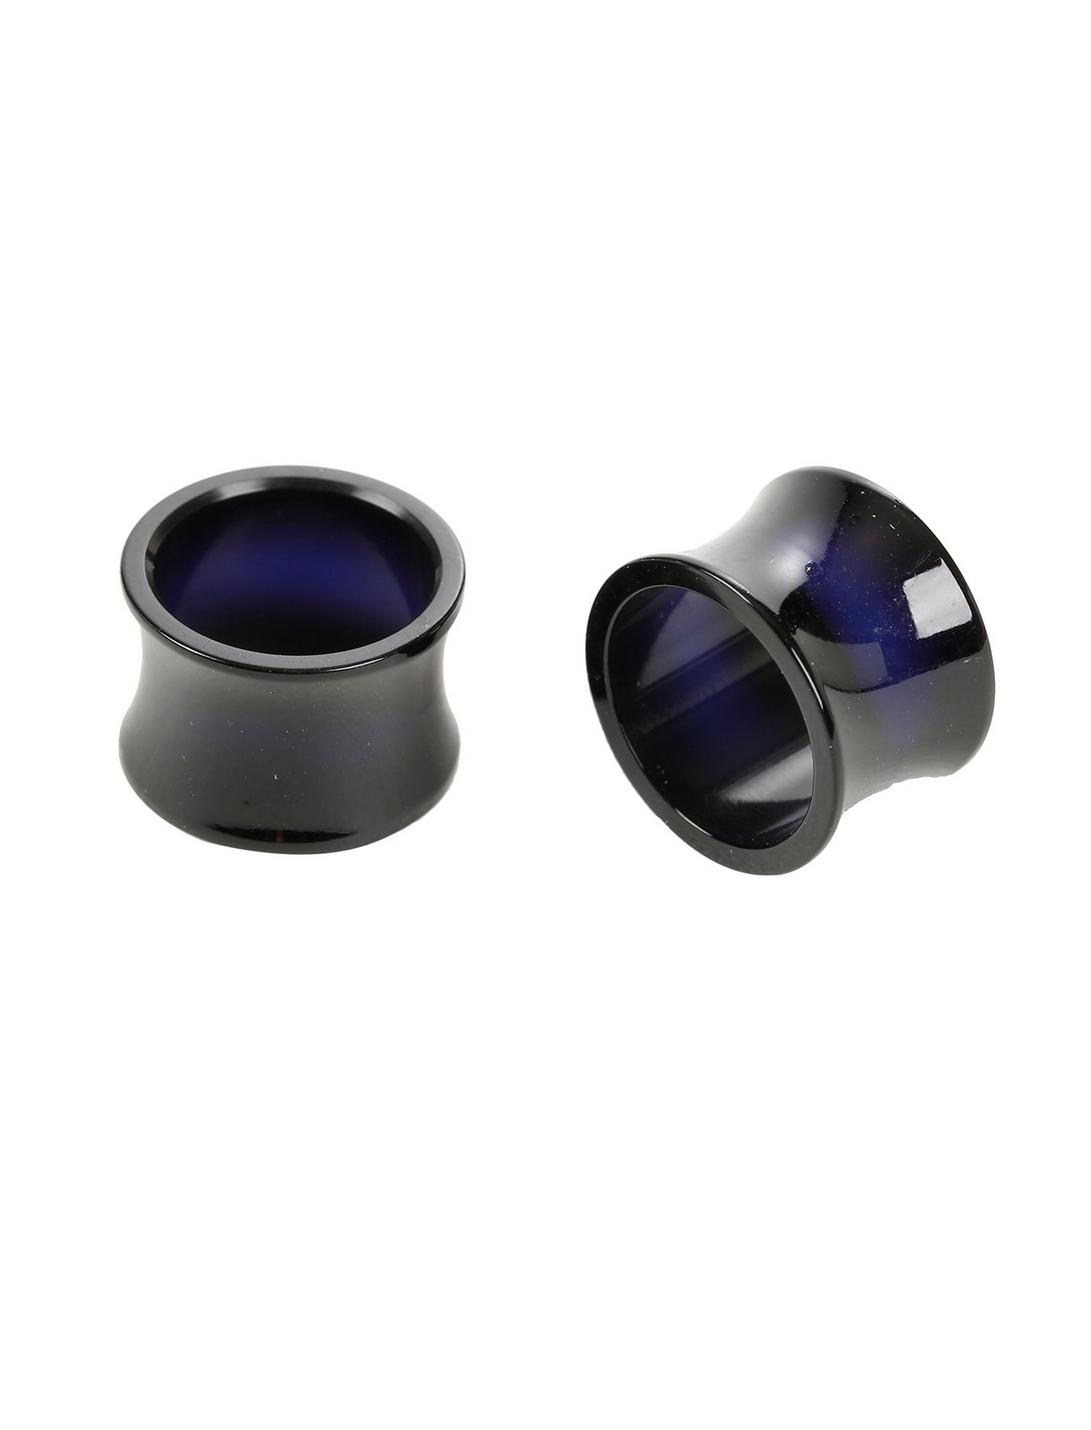 Acrylic Black Thin Wall Eyelet Plug 2 Pack, BLACK, hi-res